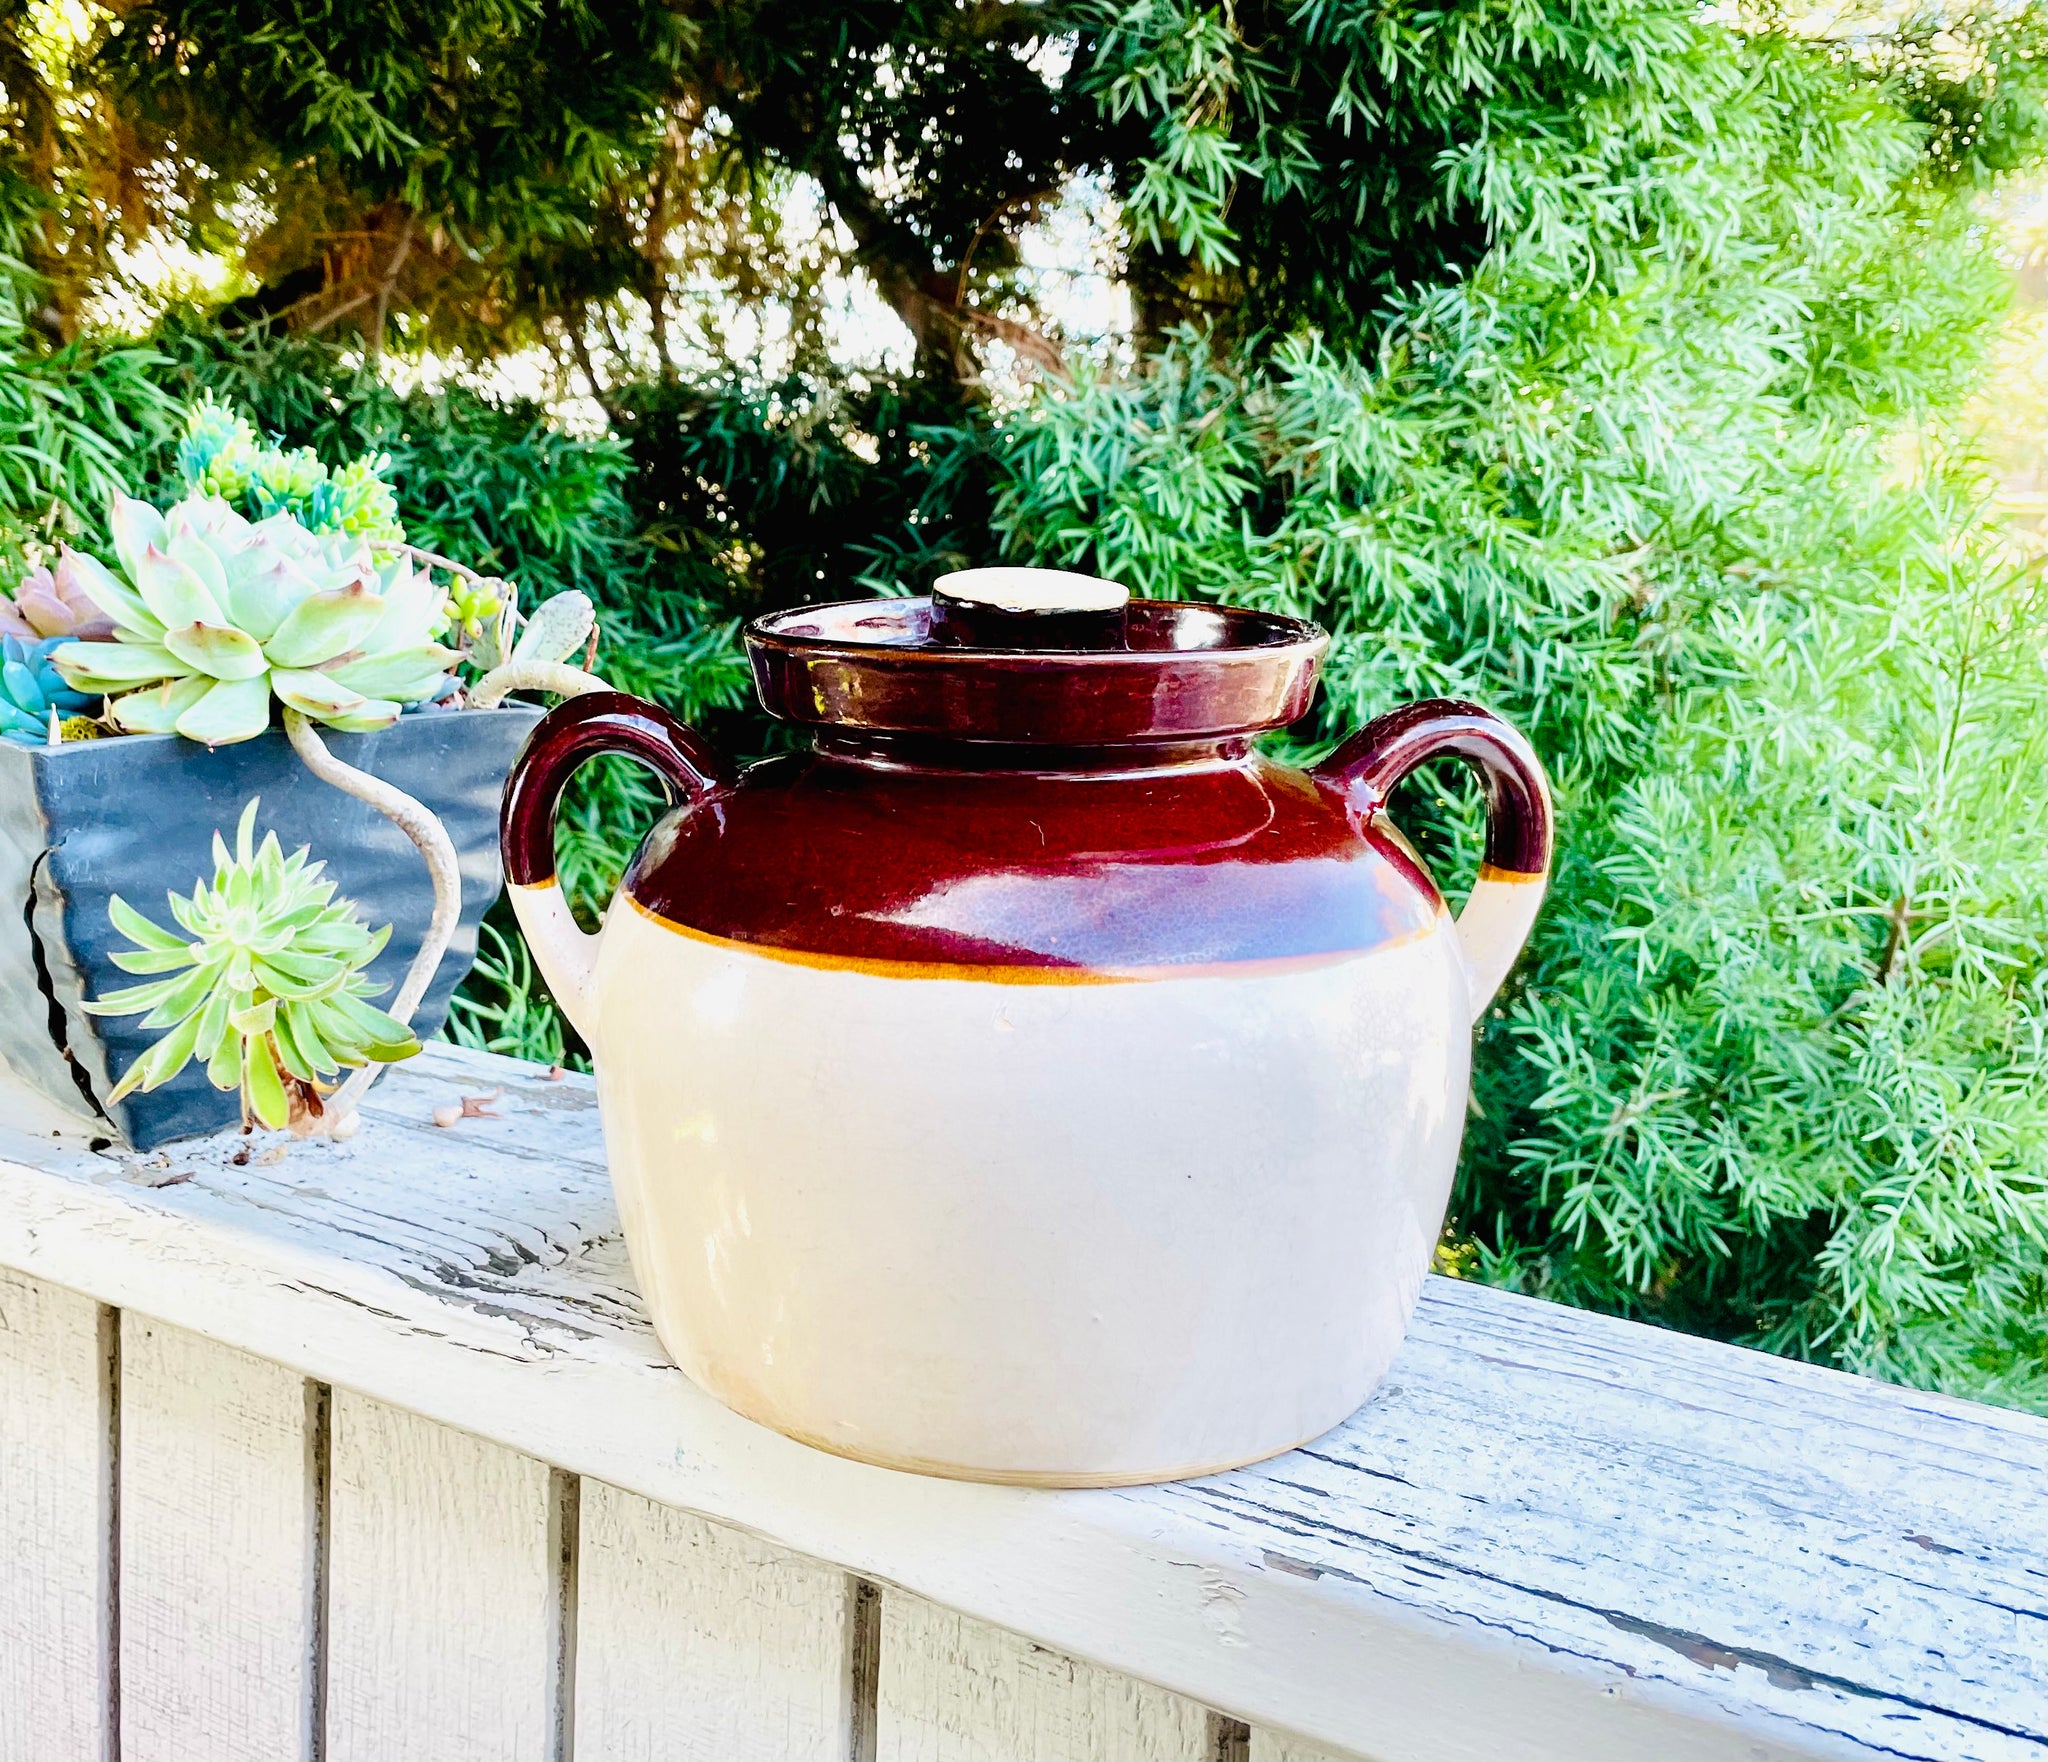 Vintage Bean Pot  Stoneware Ceramic Bean Pot With Lid and Handles